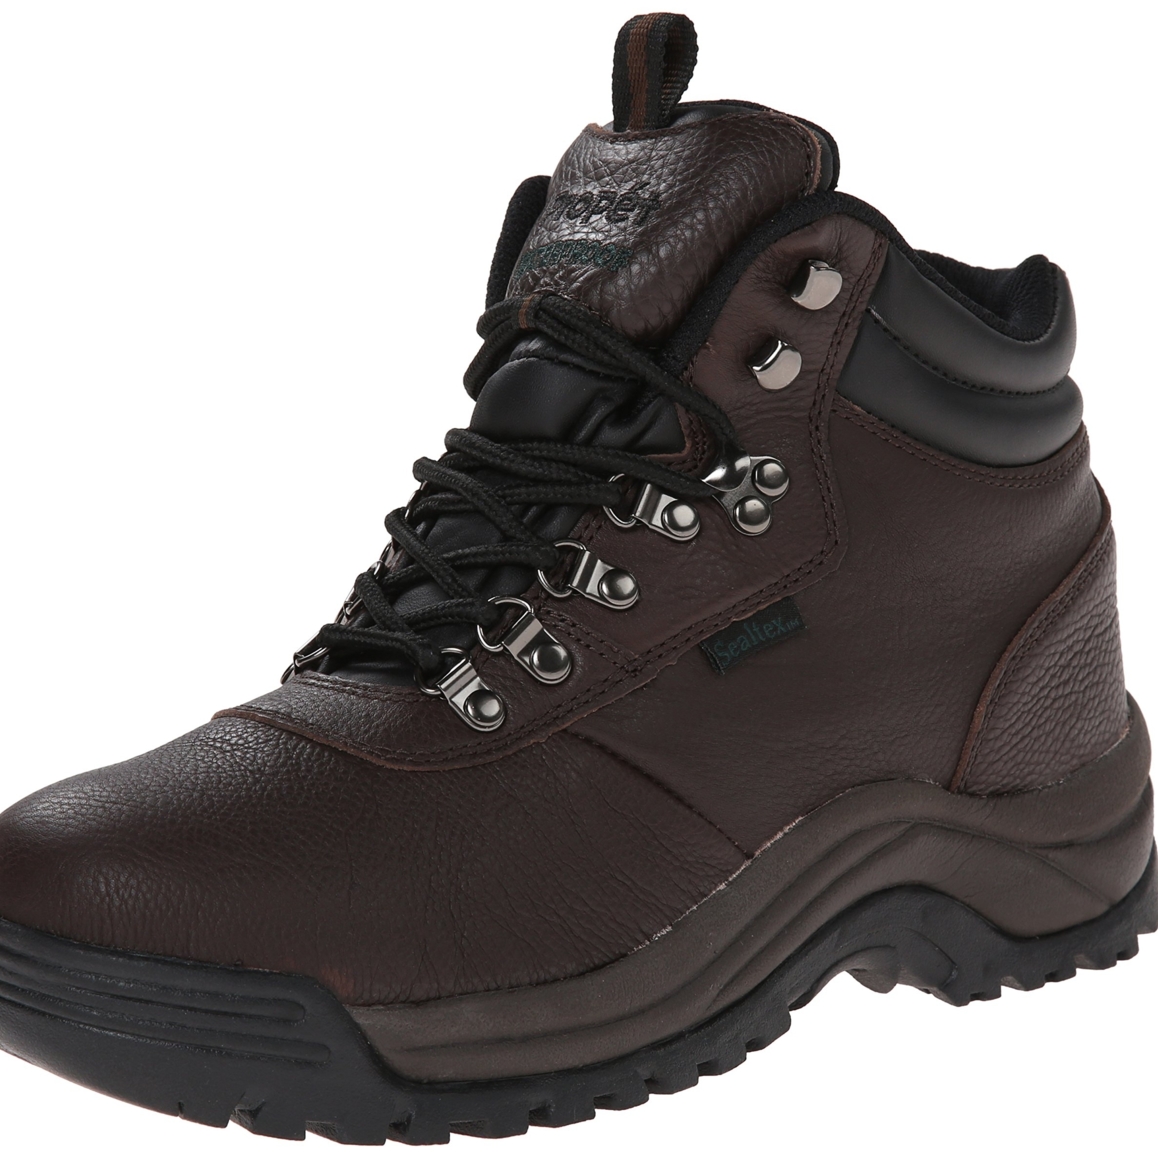 Propet Men's Cliff Walker Hiking Boot Bronco Brown - M3188BRO - BRONCO BROWN, 9.5-4E